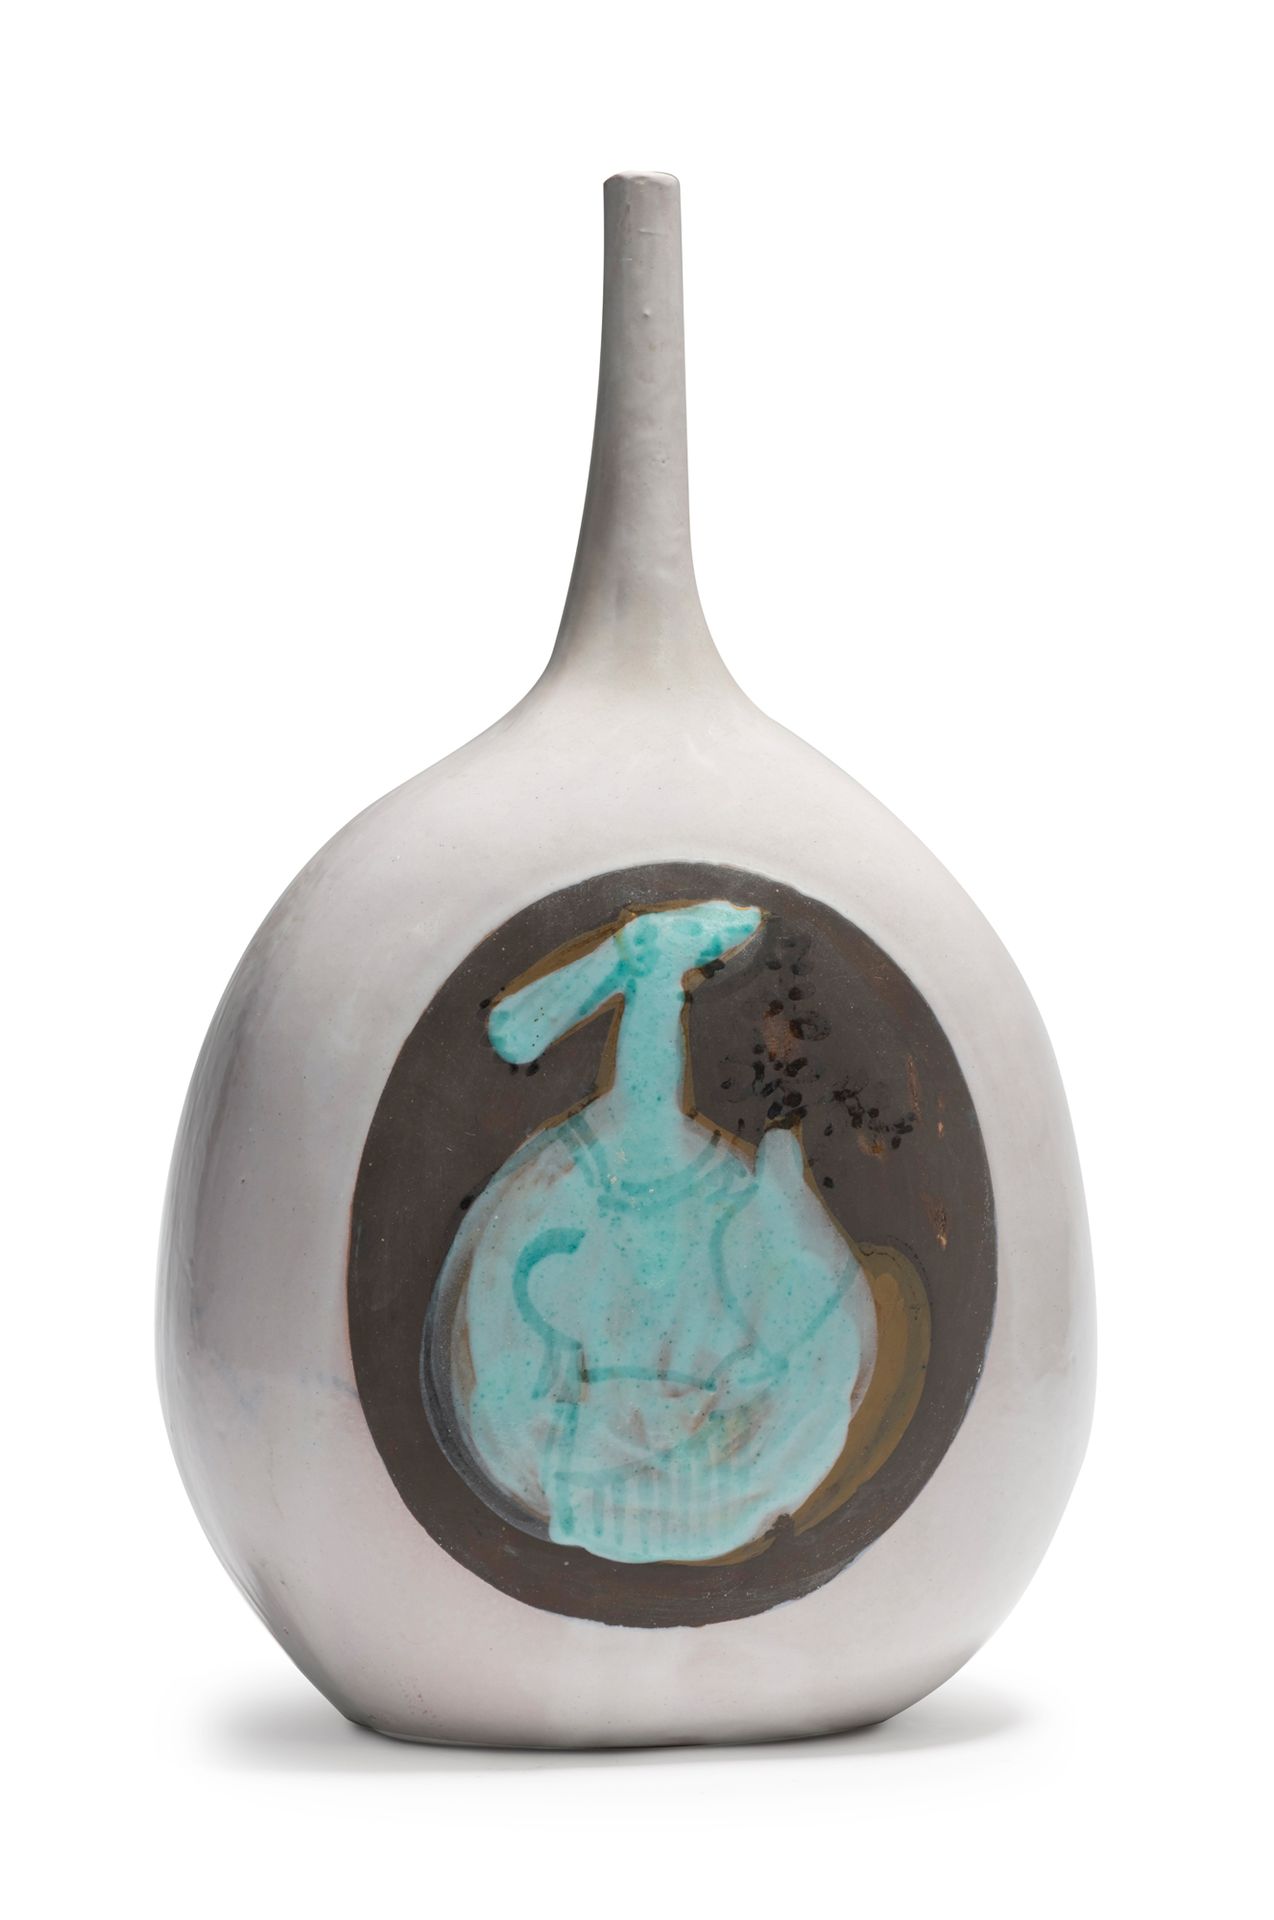 JACQUES INNOCENTI (1926-1958) 
白色釉面陶瓷花瓶，有粉红色的色调，装饰有人物的徽章
签有单字 "JI"
大约1950-1960
高&hellip;